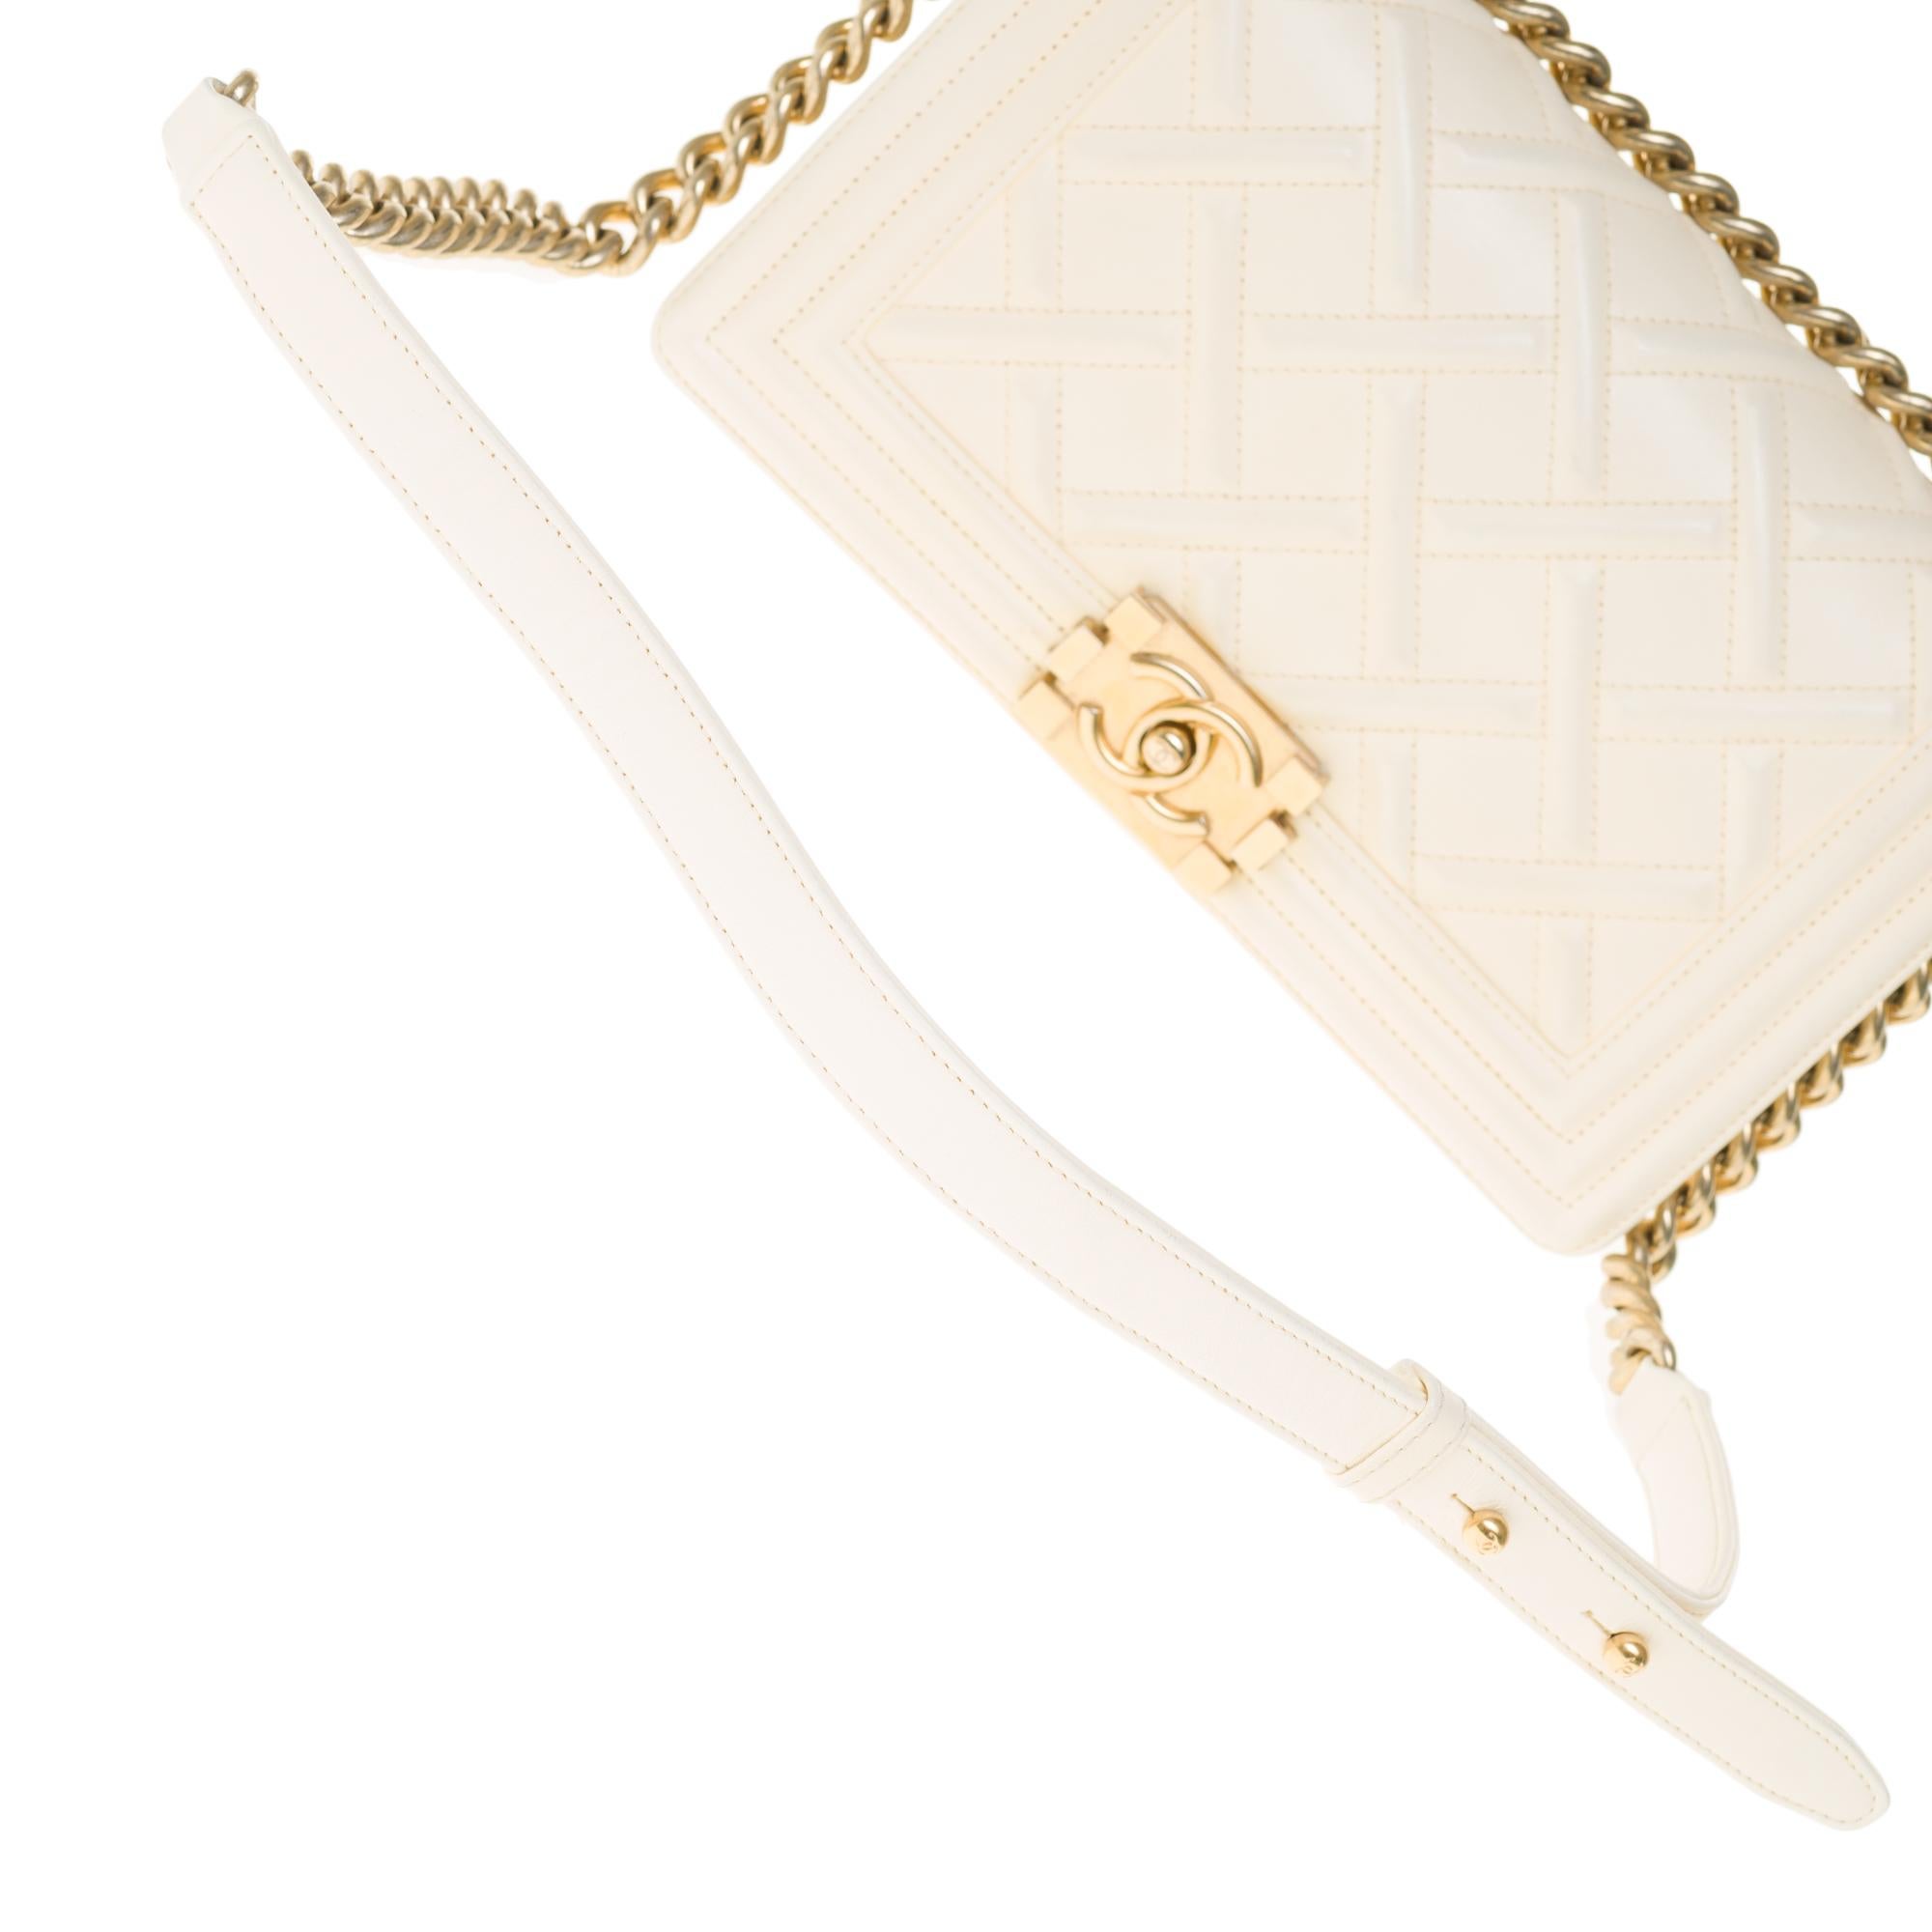 Chanel Boy Paris/Edinburgh handbag in ivory embossed leather, GHW ! 2